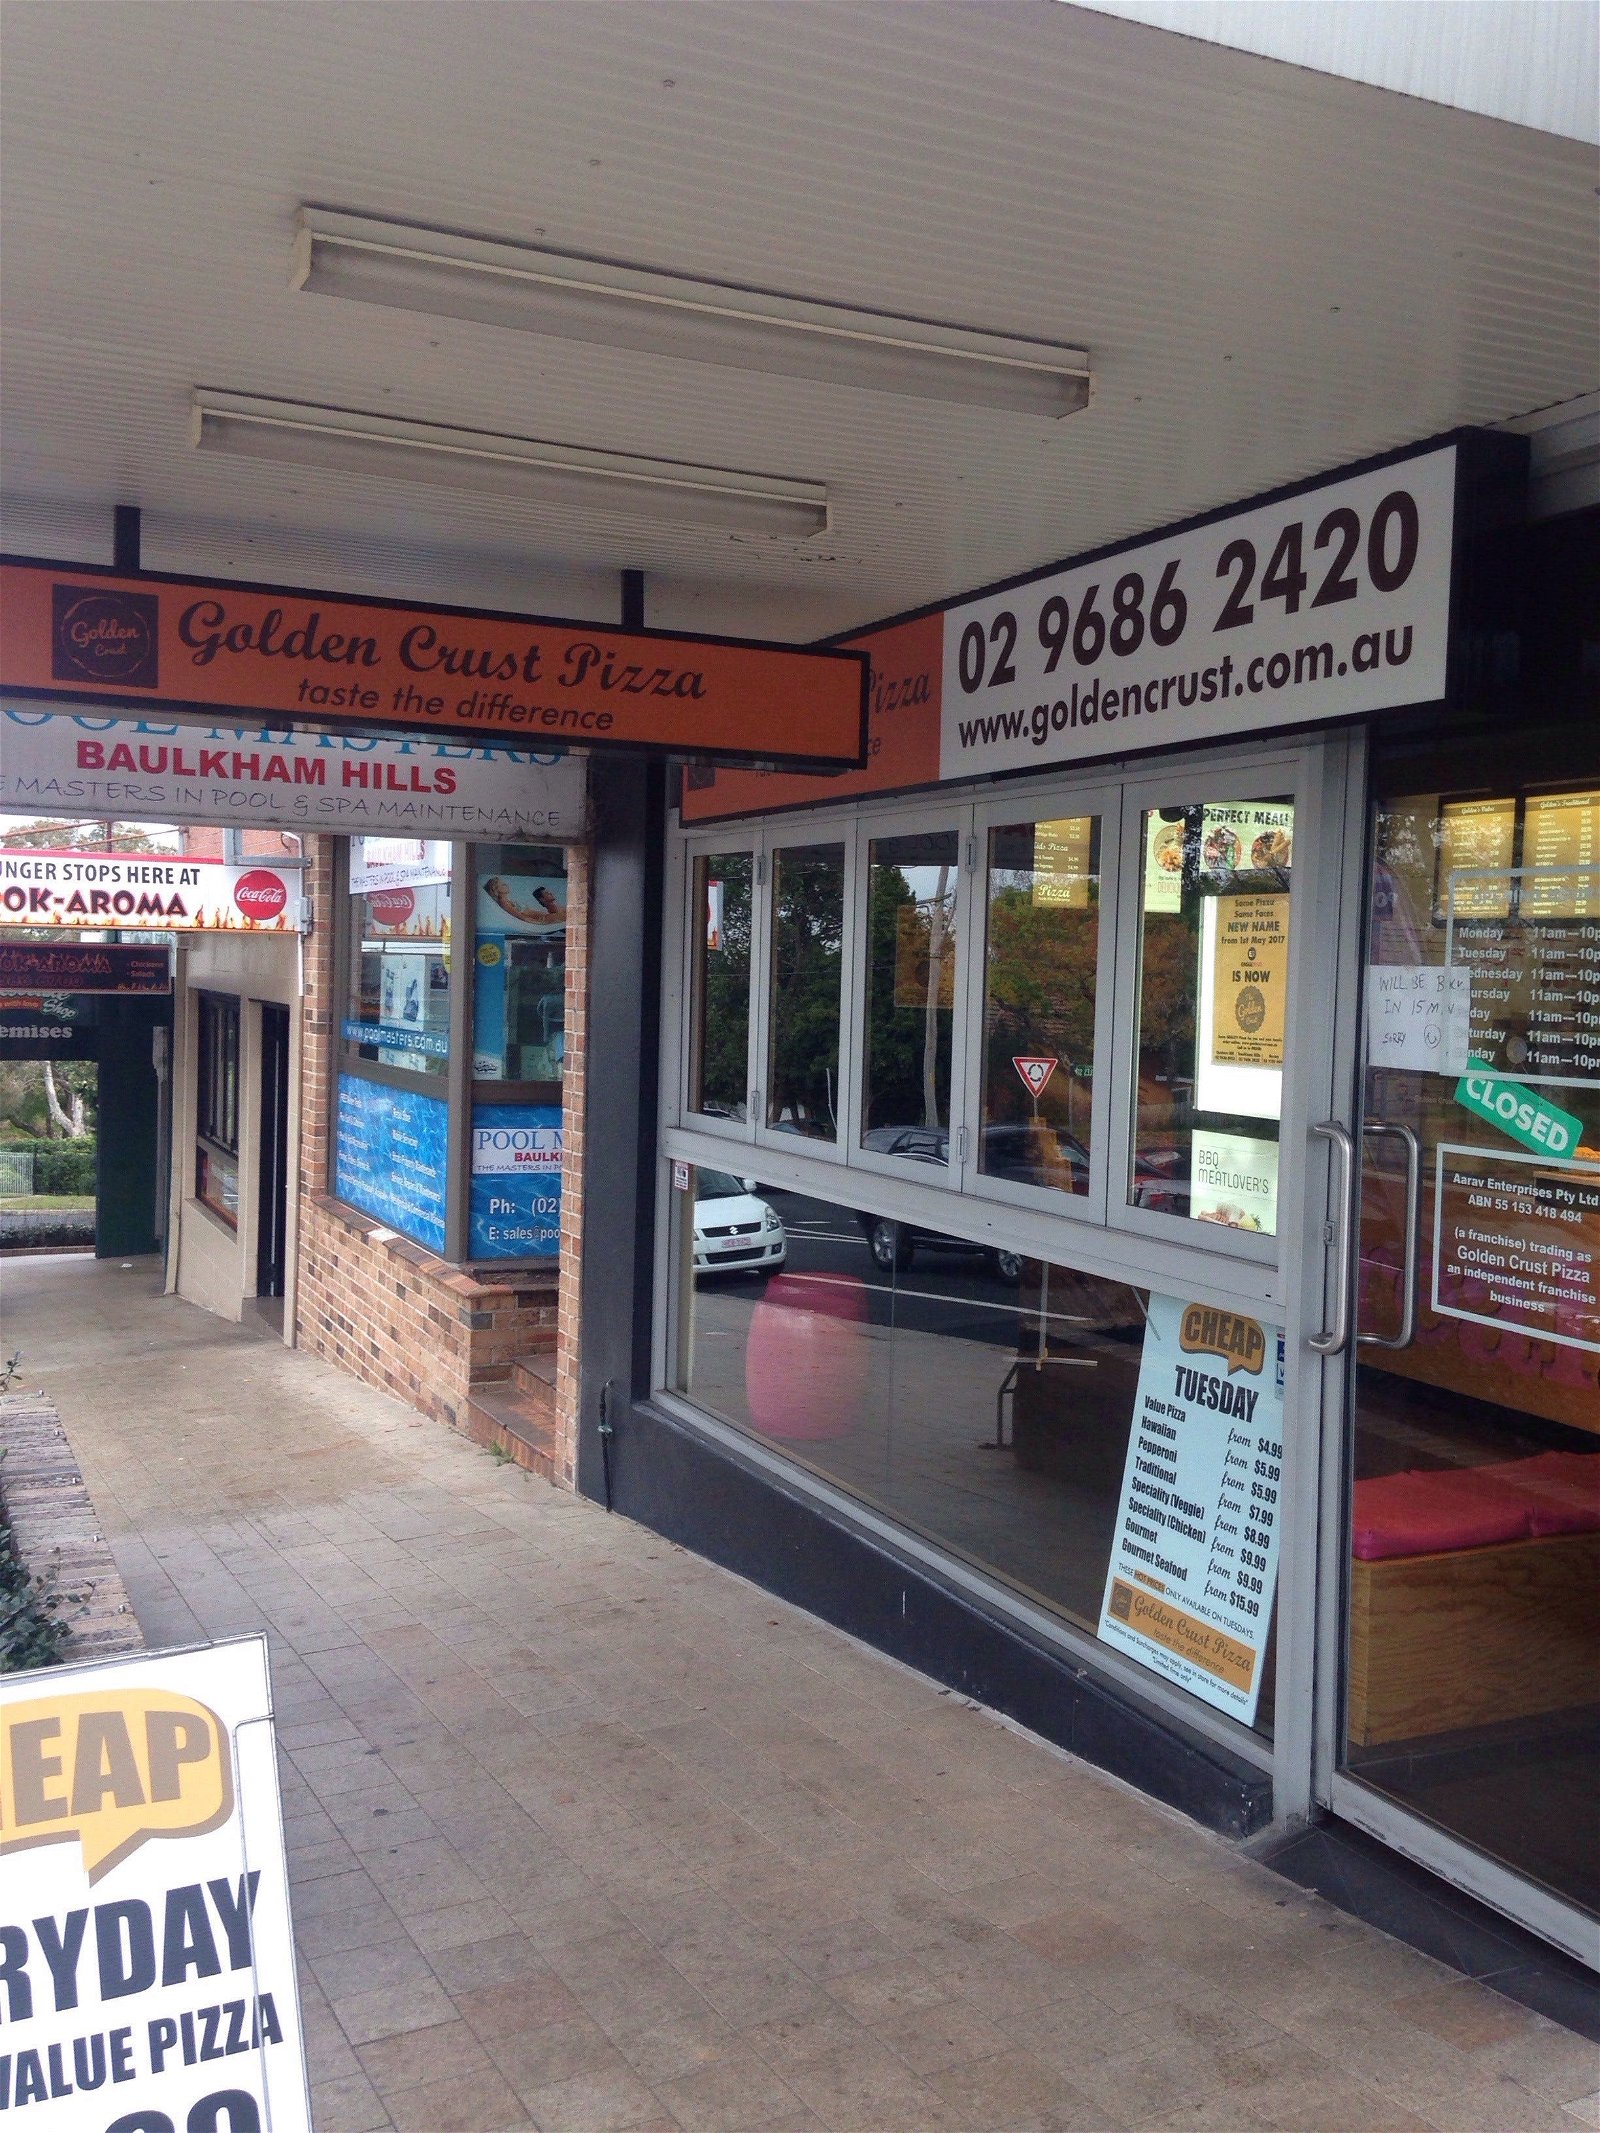 Golden Crust Pizza - Baulkham Hills - New South Wales Tourism 